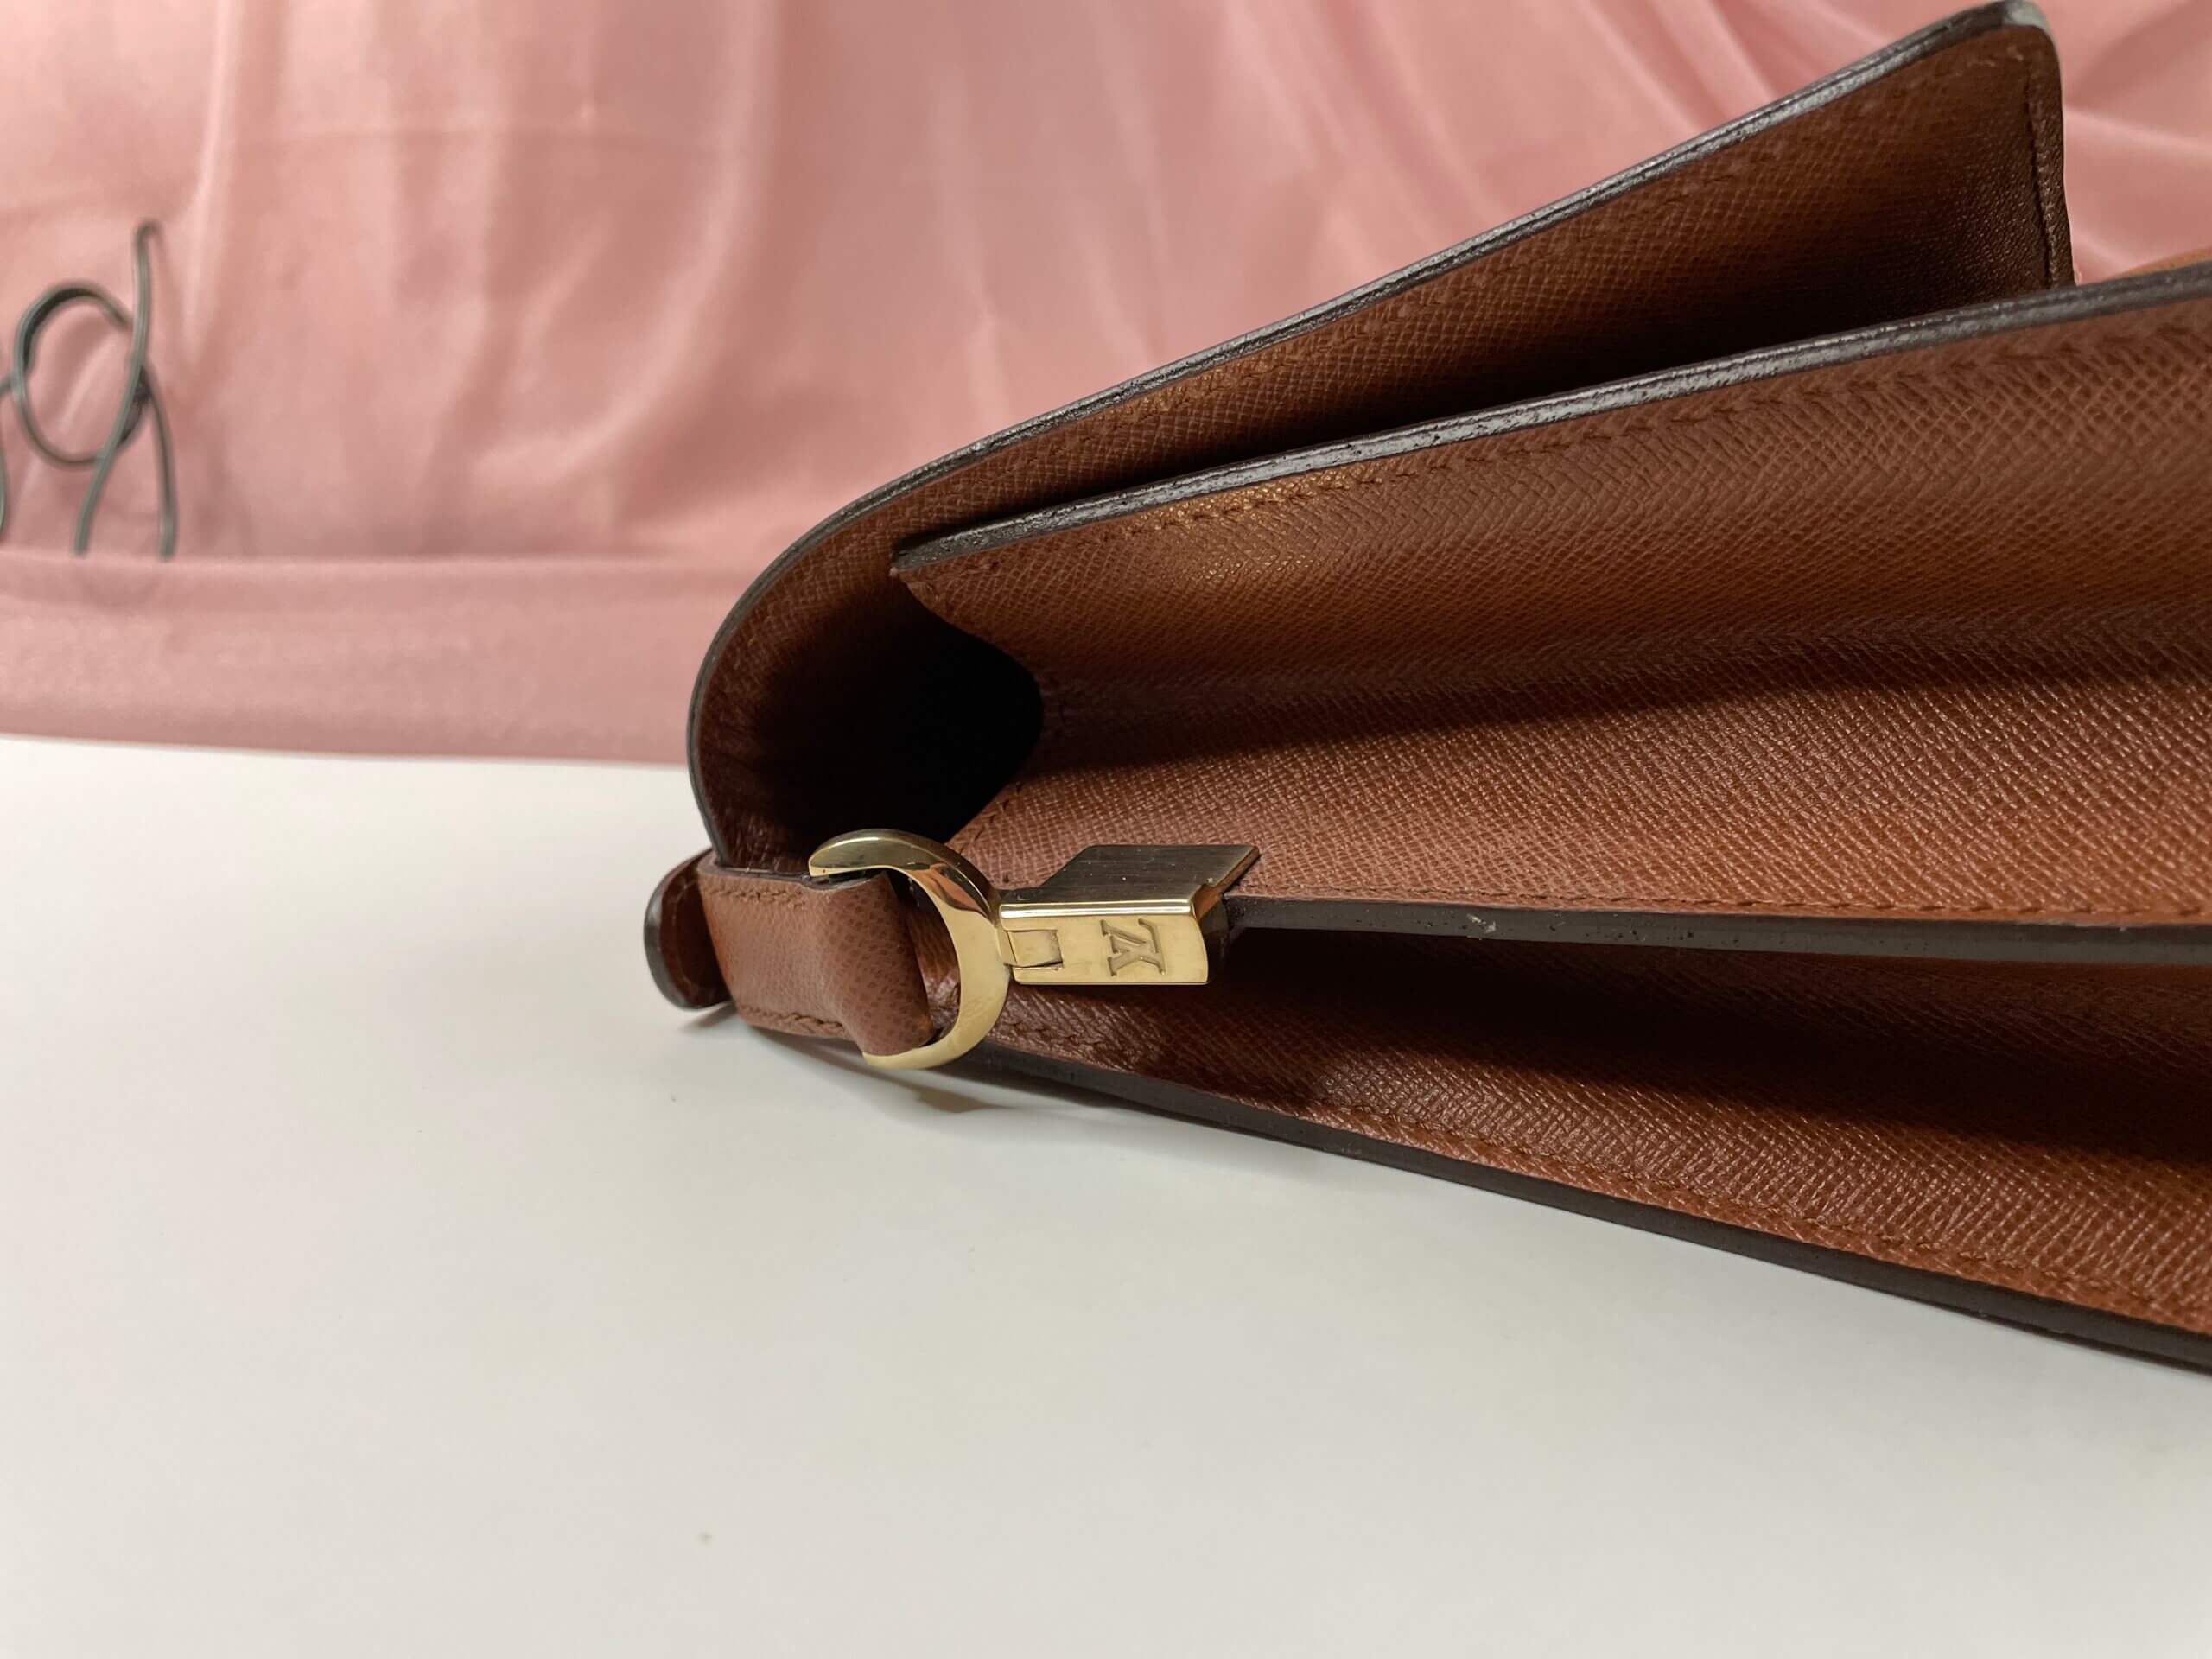 Louis Vuitton Raspail bag Free Shipping Worldwide✈️ DM for more